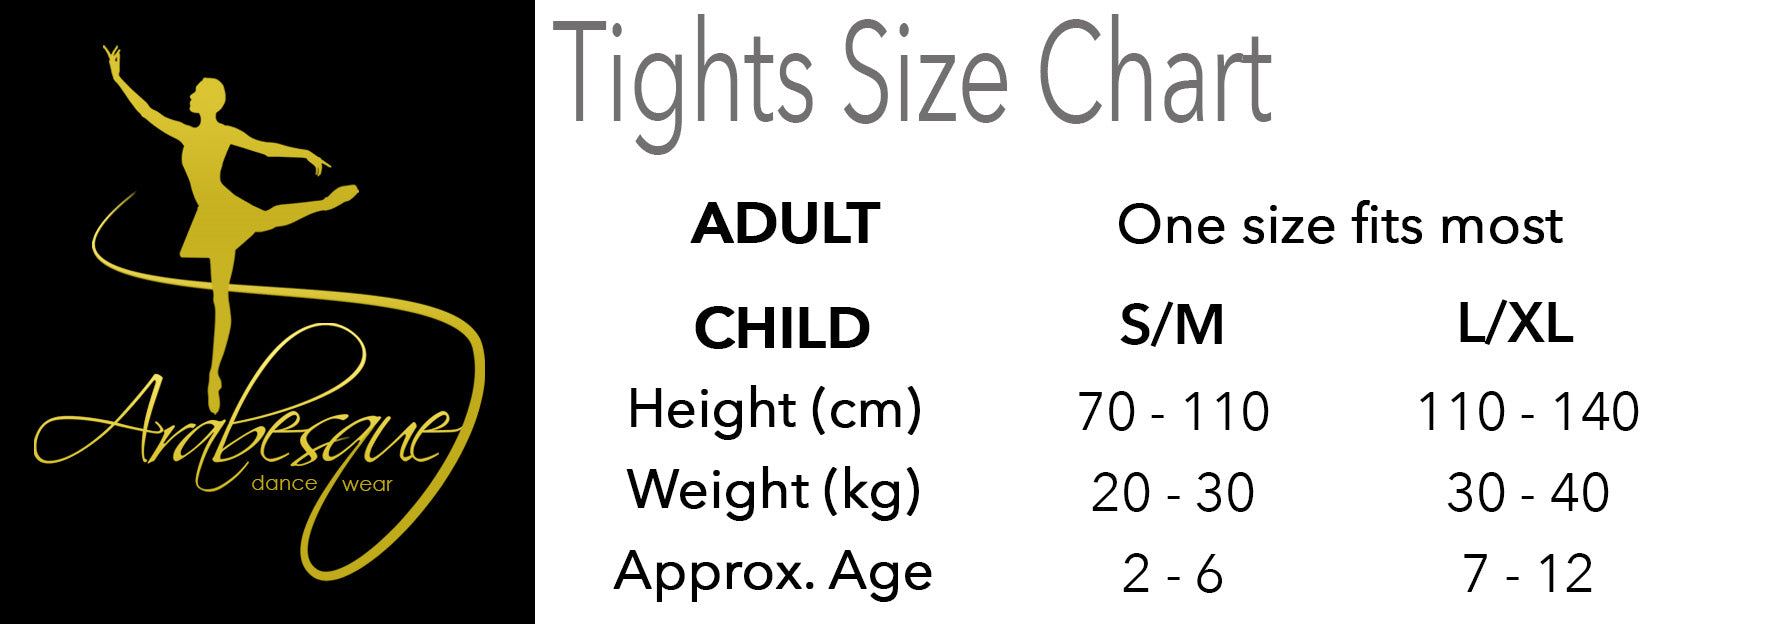 Arabesque Tights Size Chart